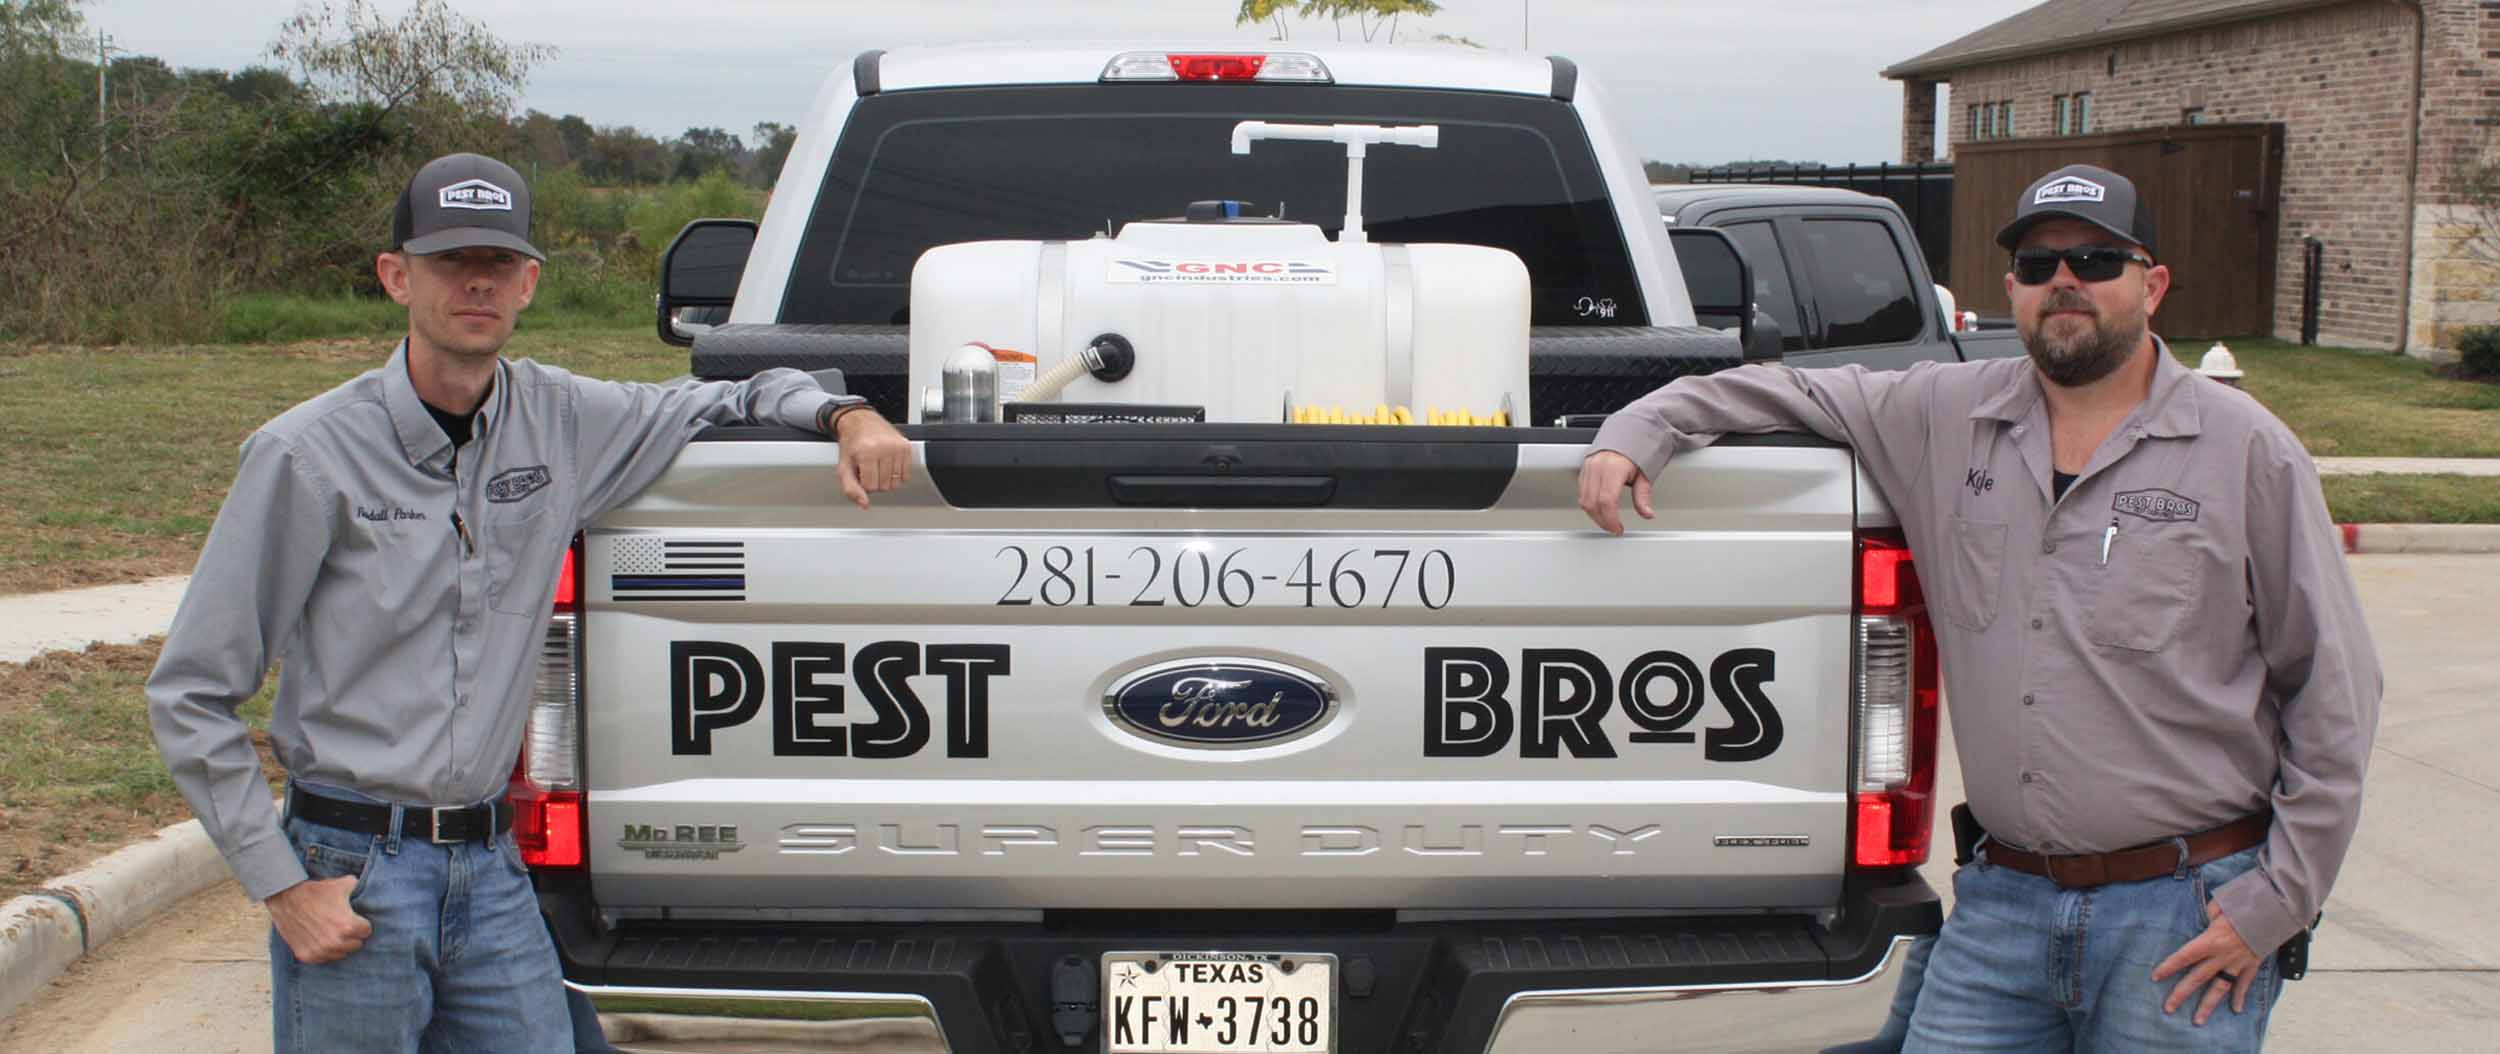 Pest bros van providing pest control services